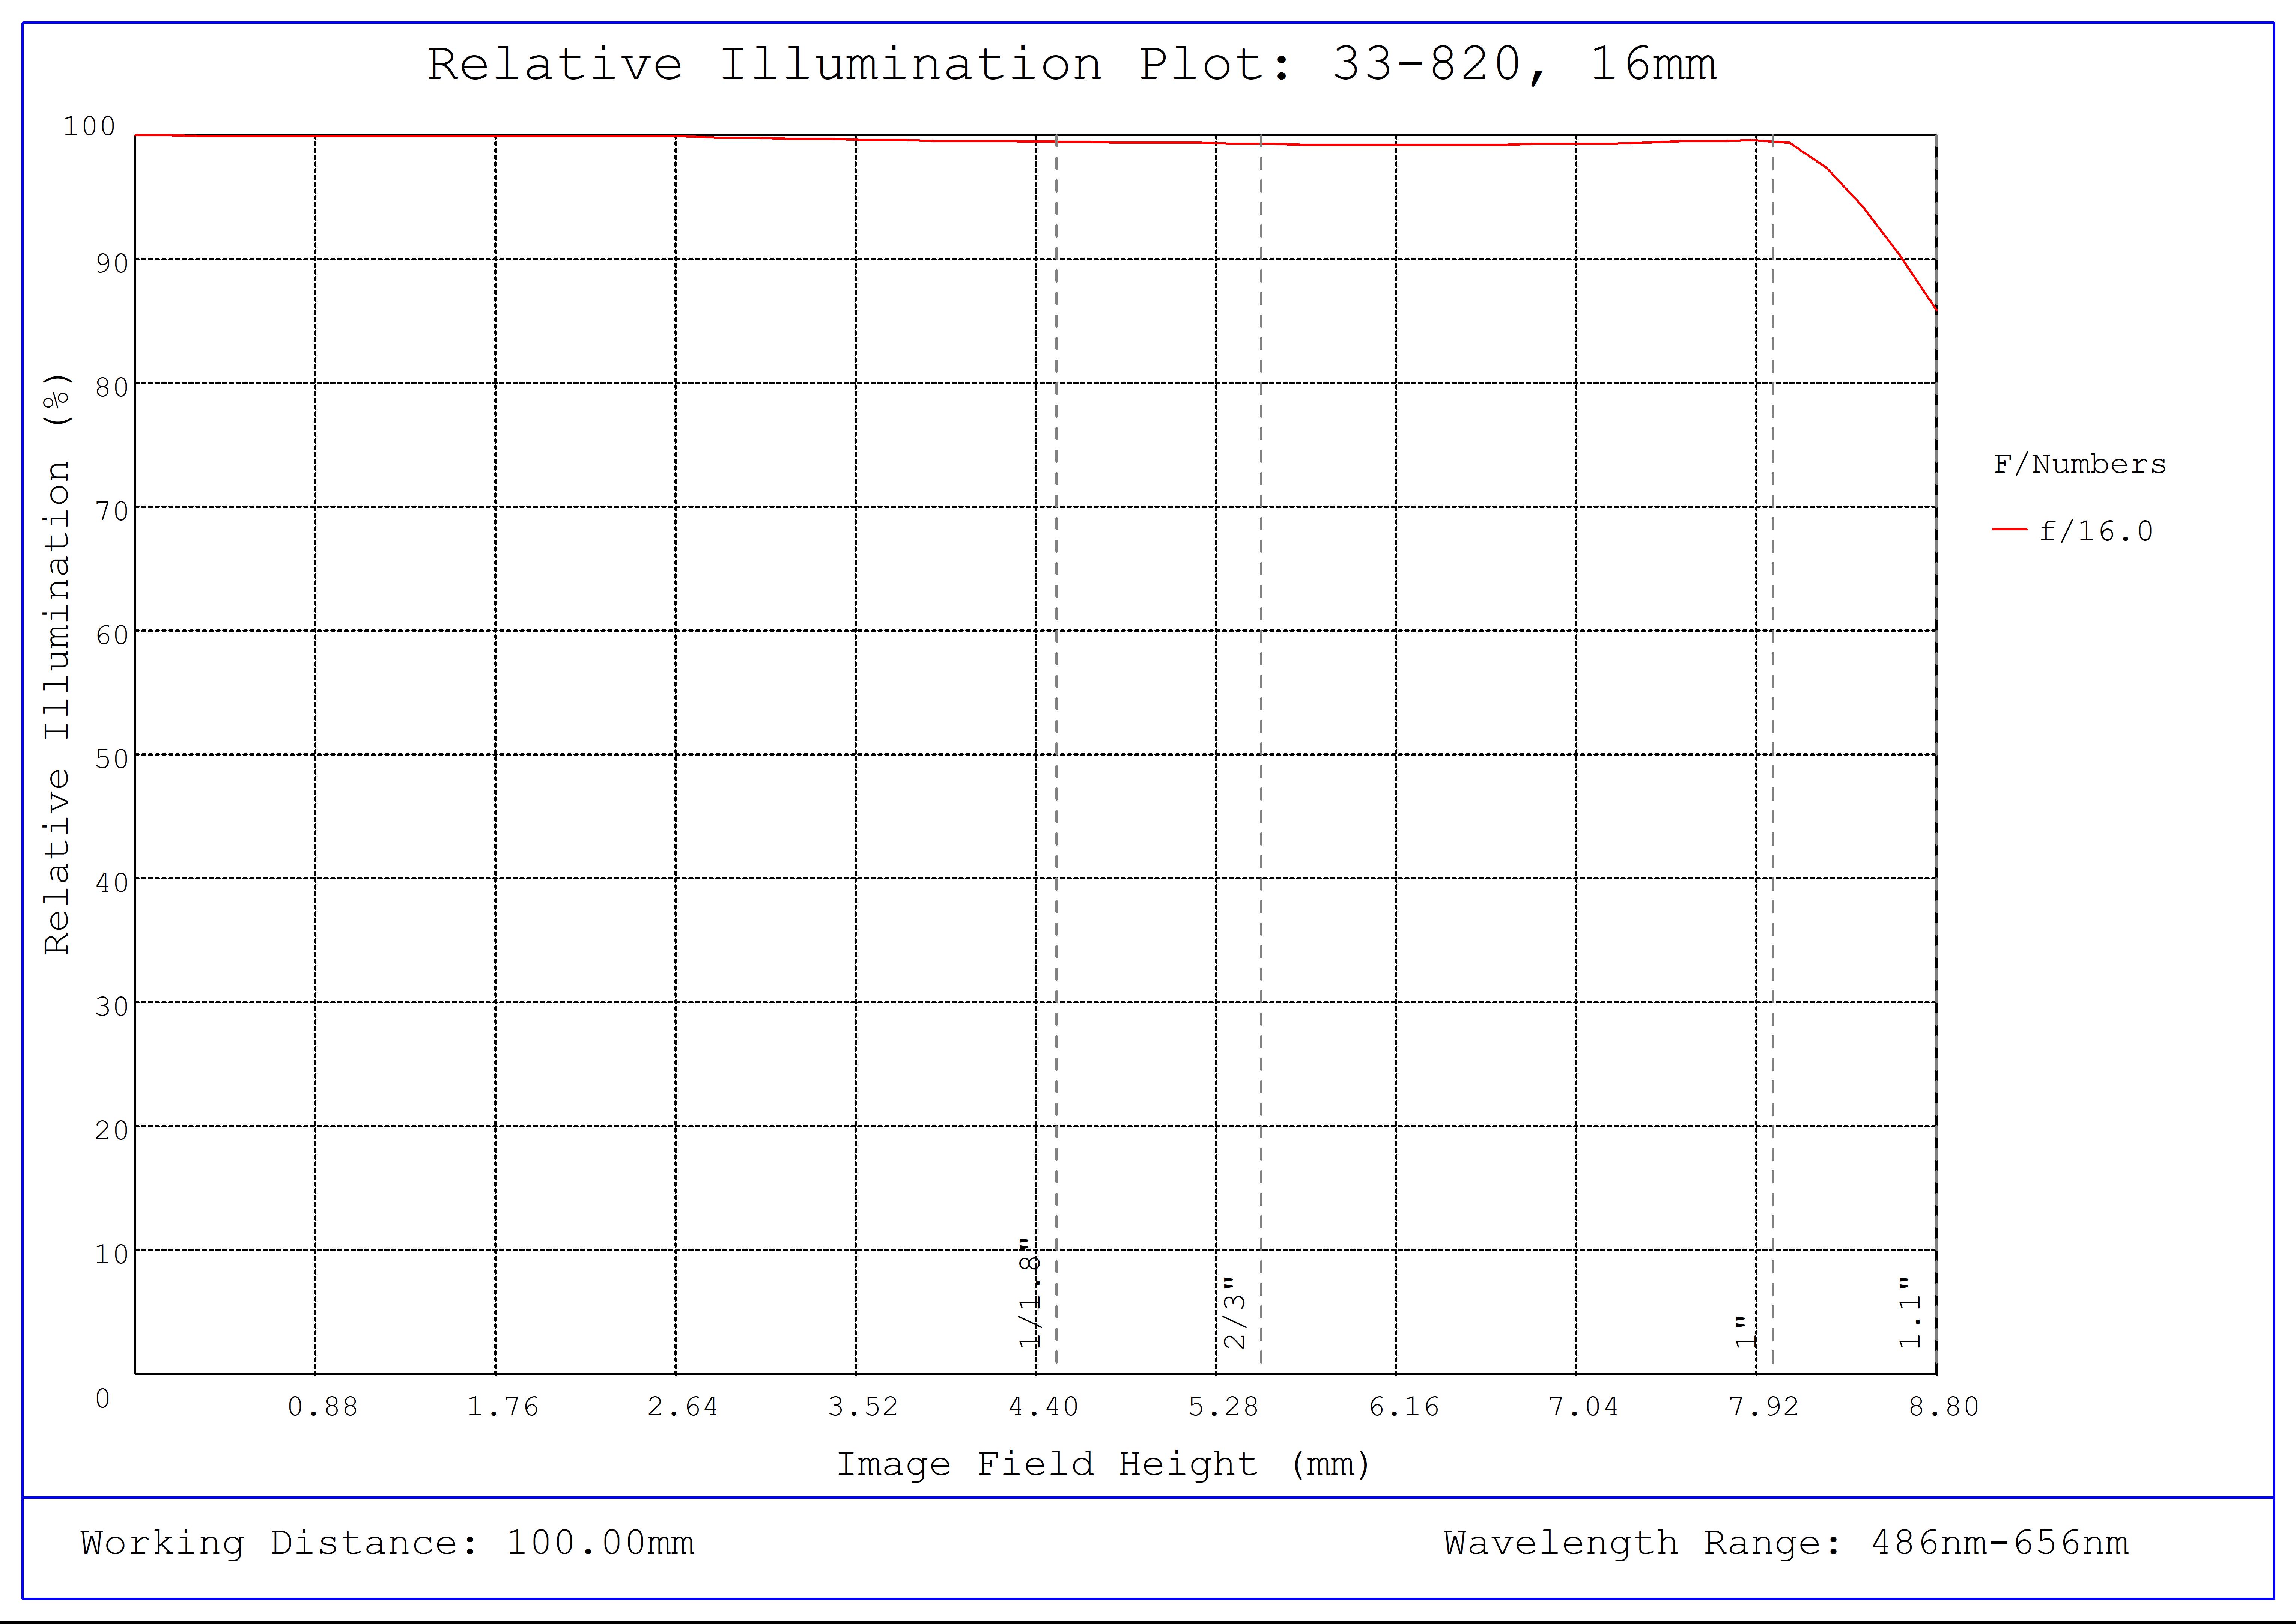 #33-820, 16mm f/16, HPi Series Fixed Focal Length Lens, Relative Illumination Plot